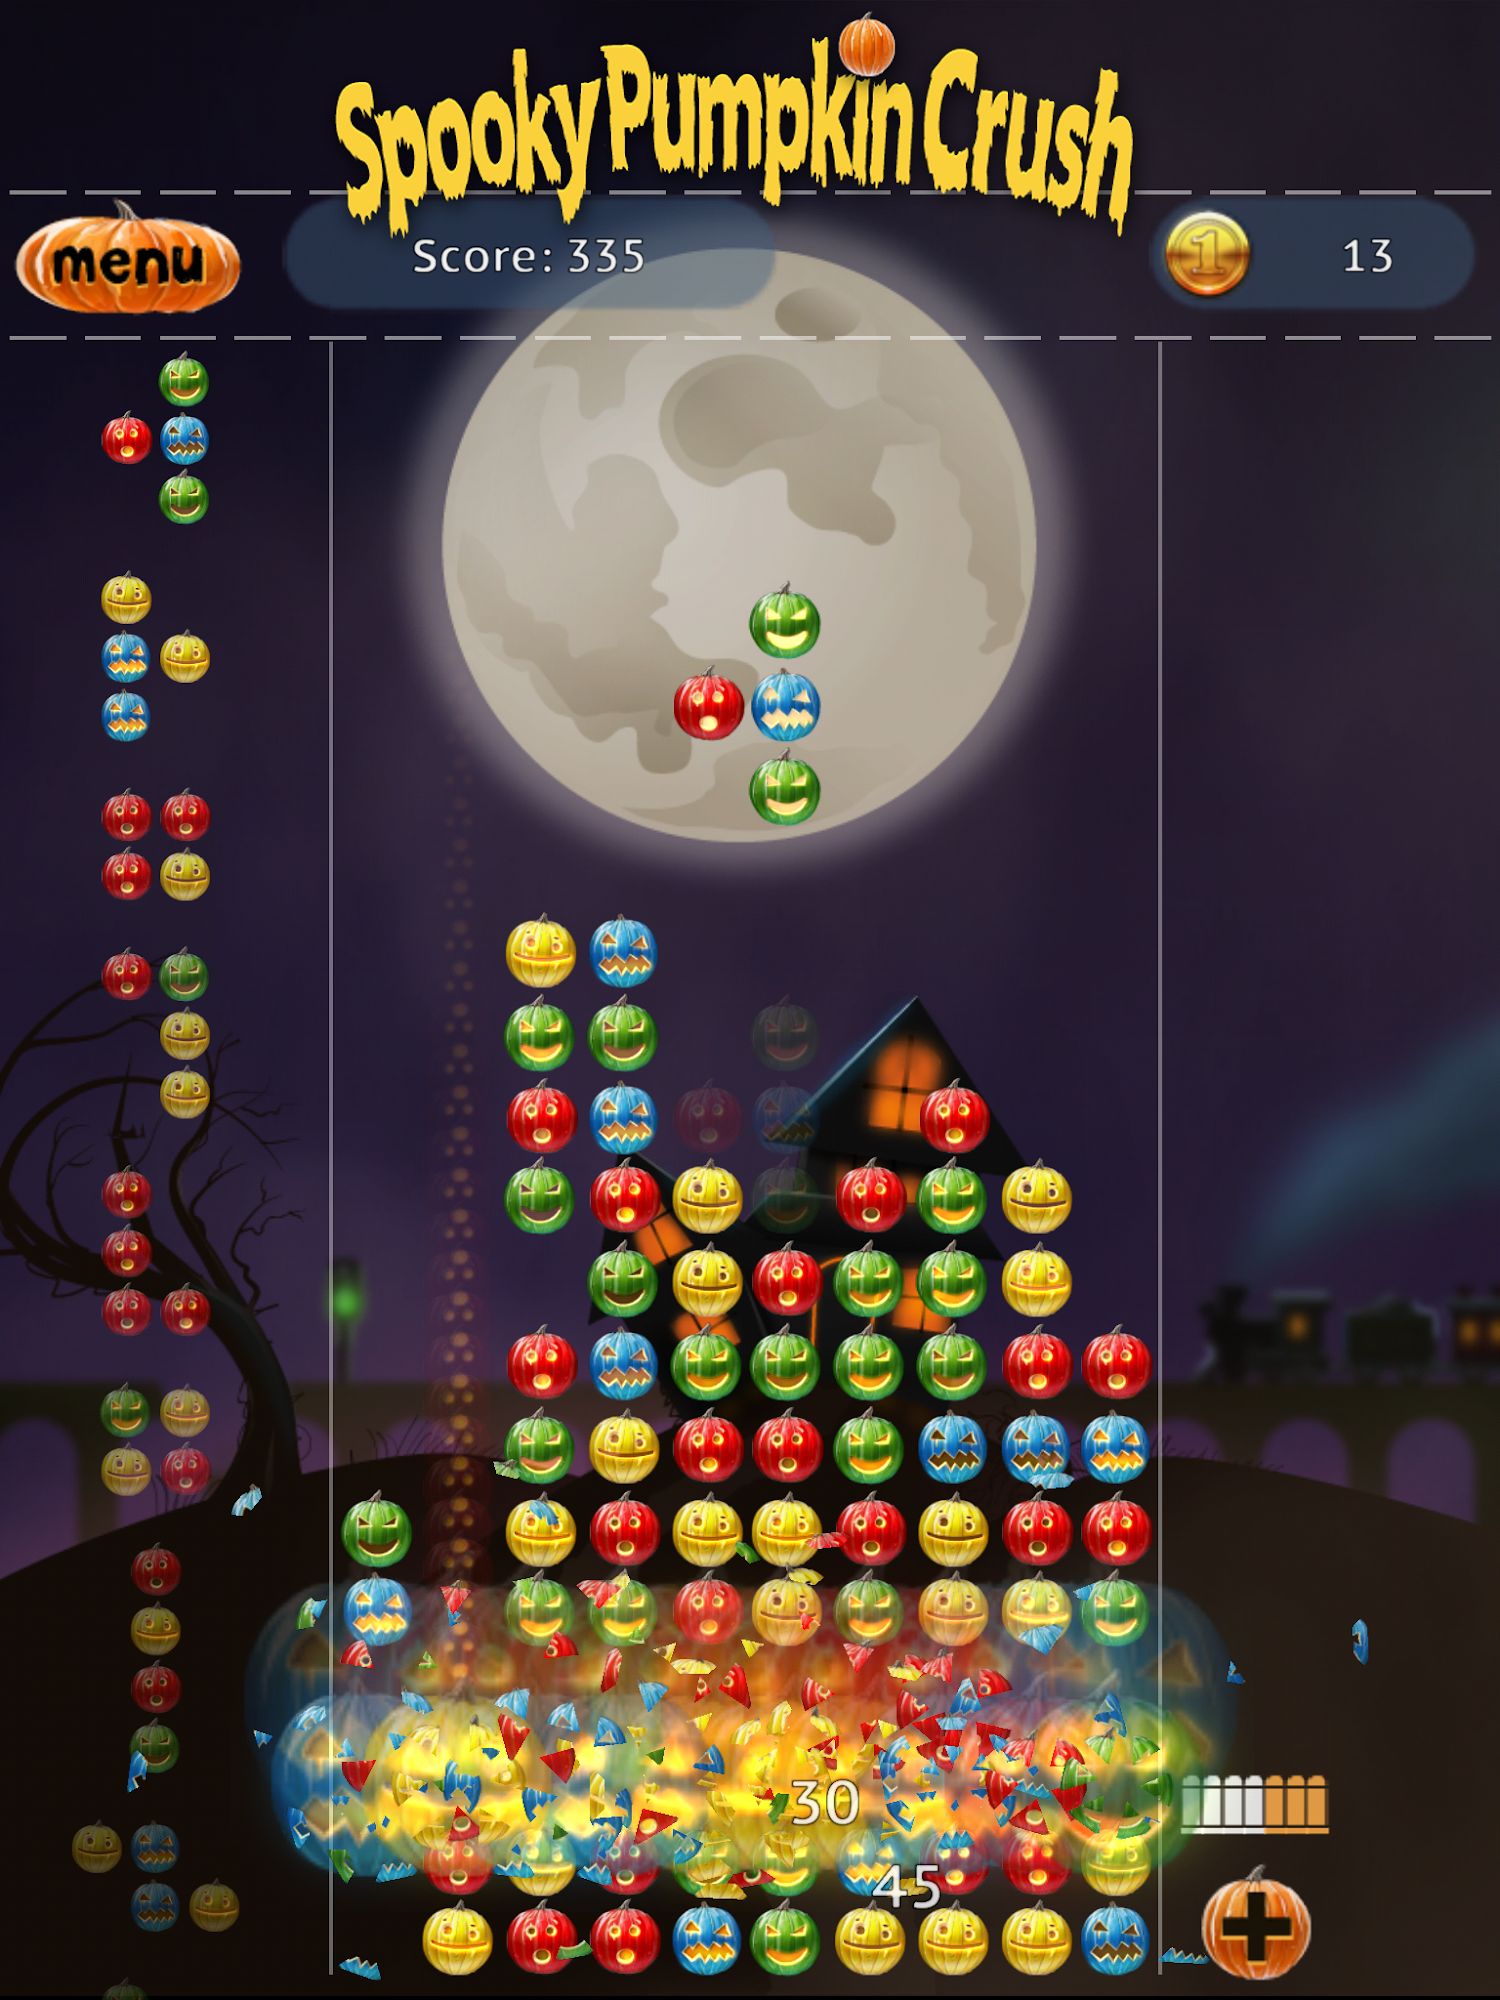 Spooky House ® Pumpkin Crush - Android game screenshots.